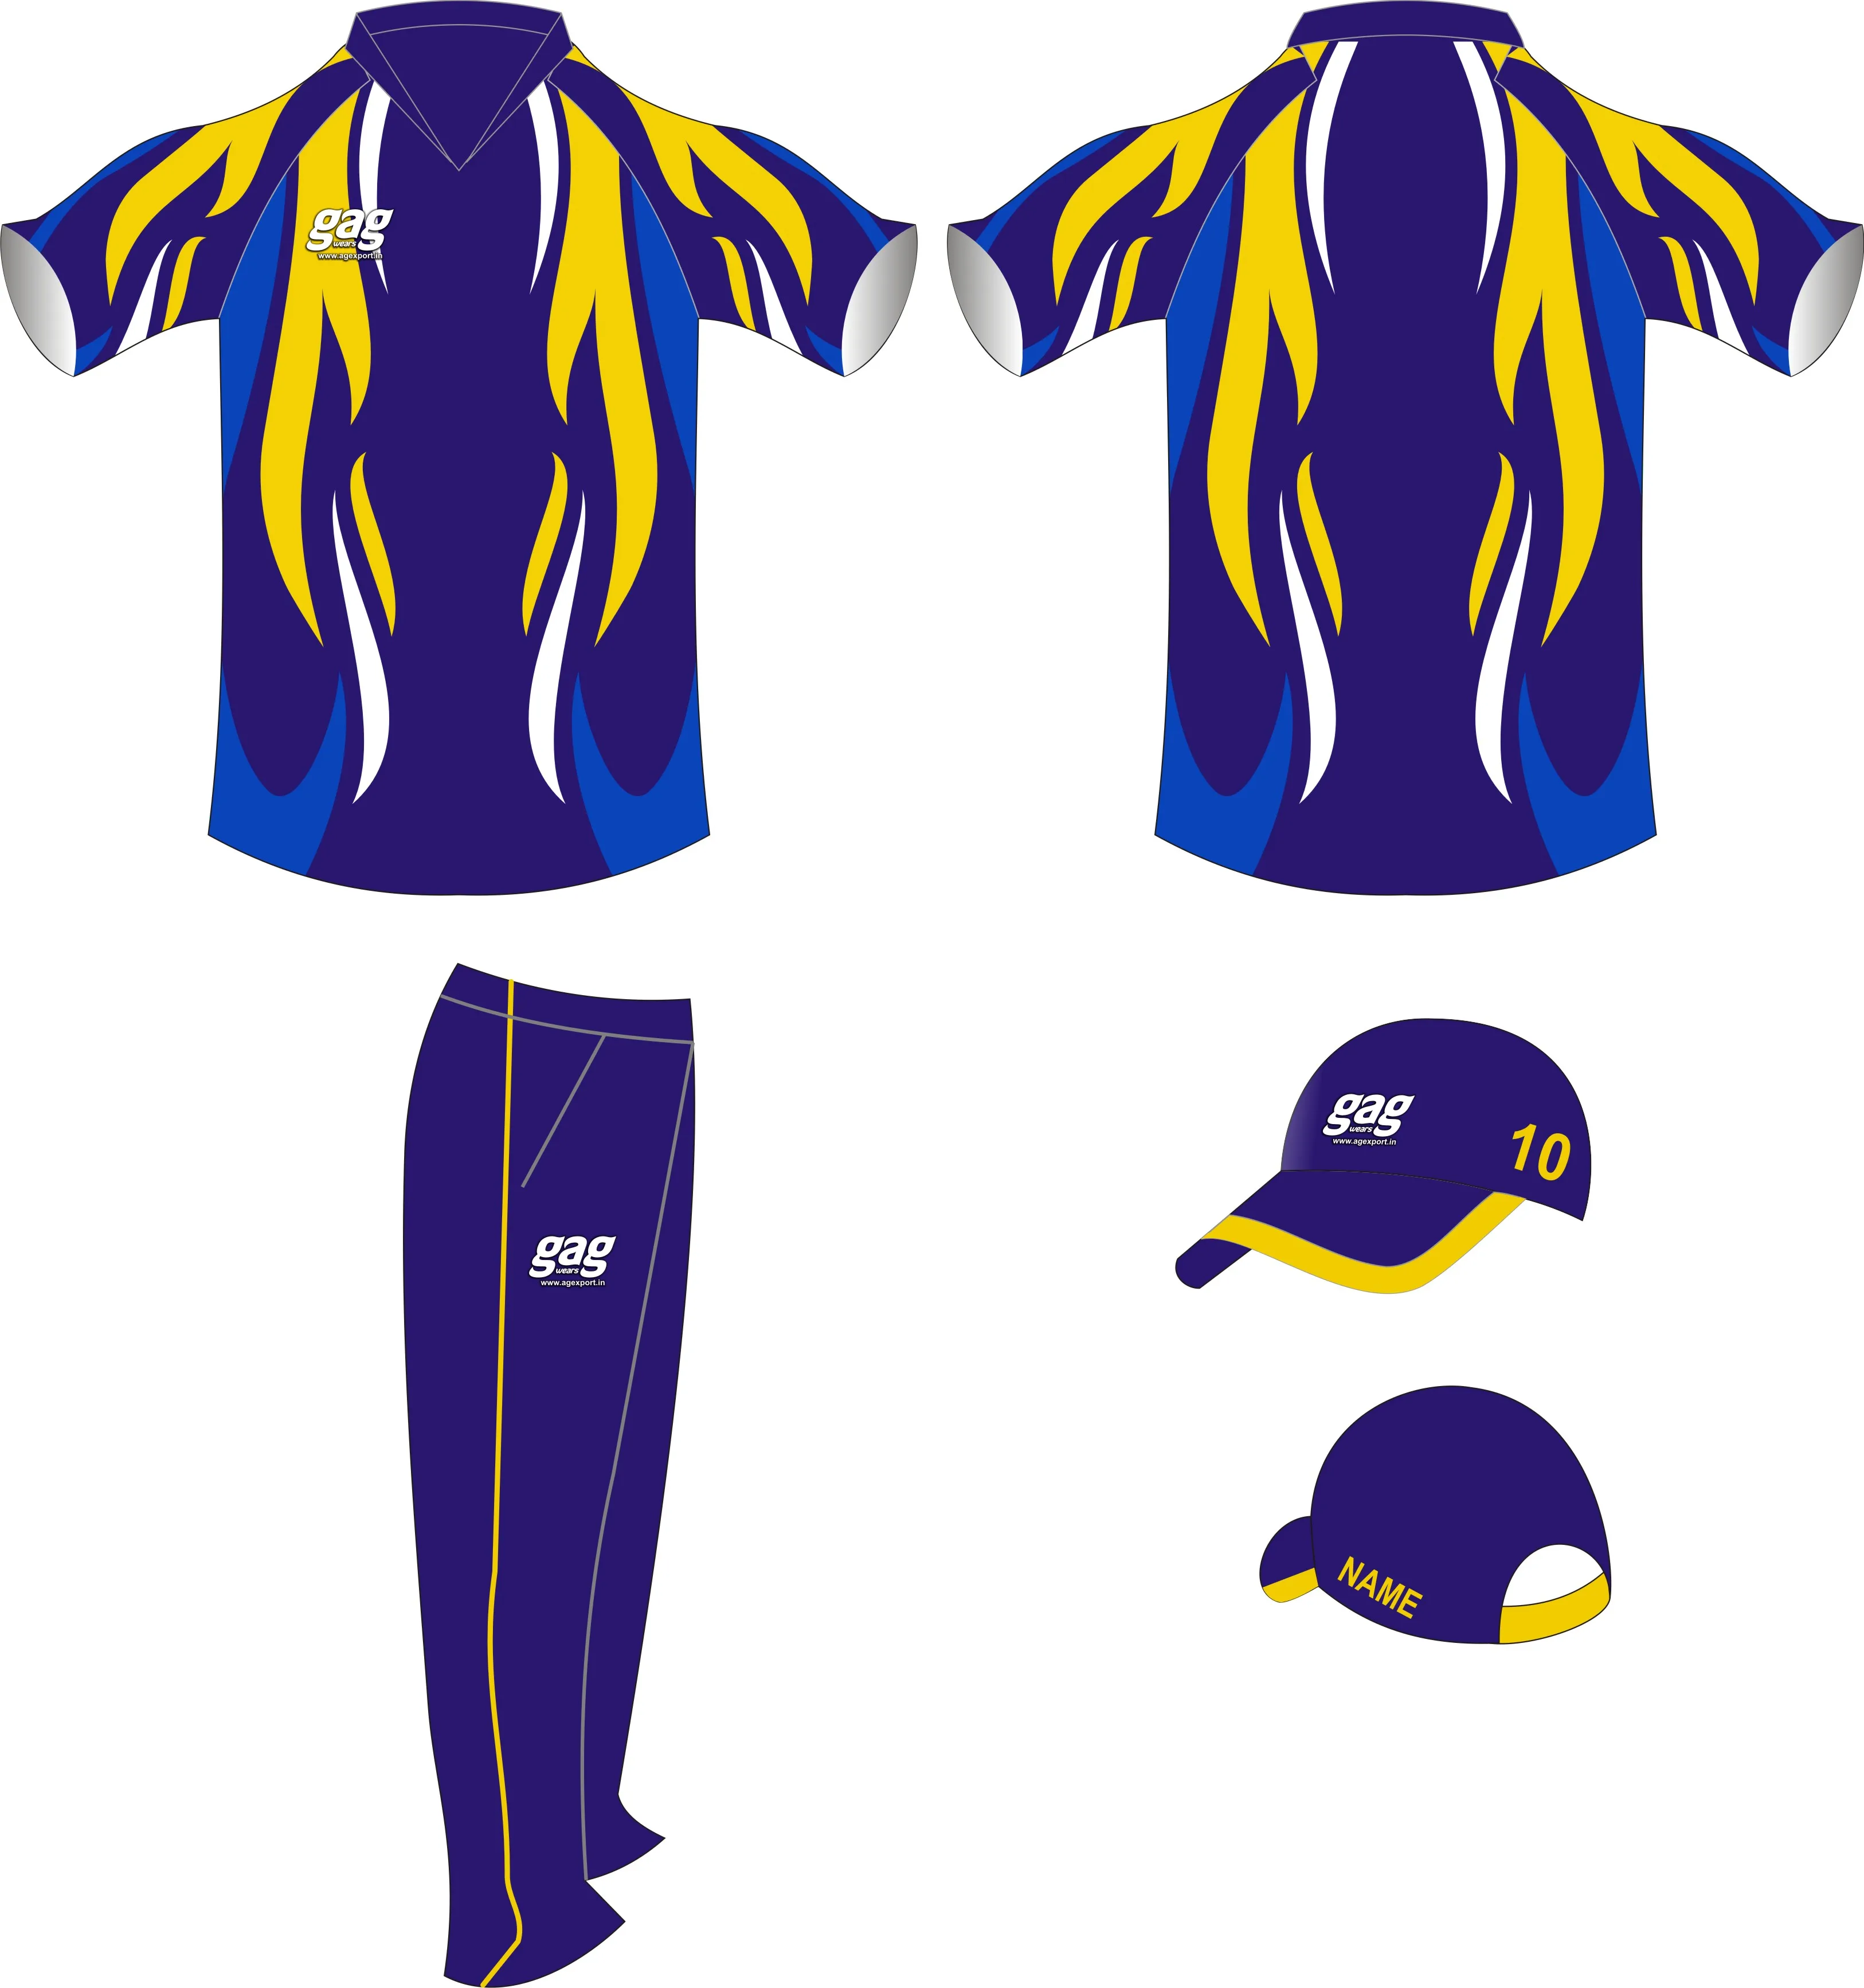 cricket jersey design full hand